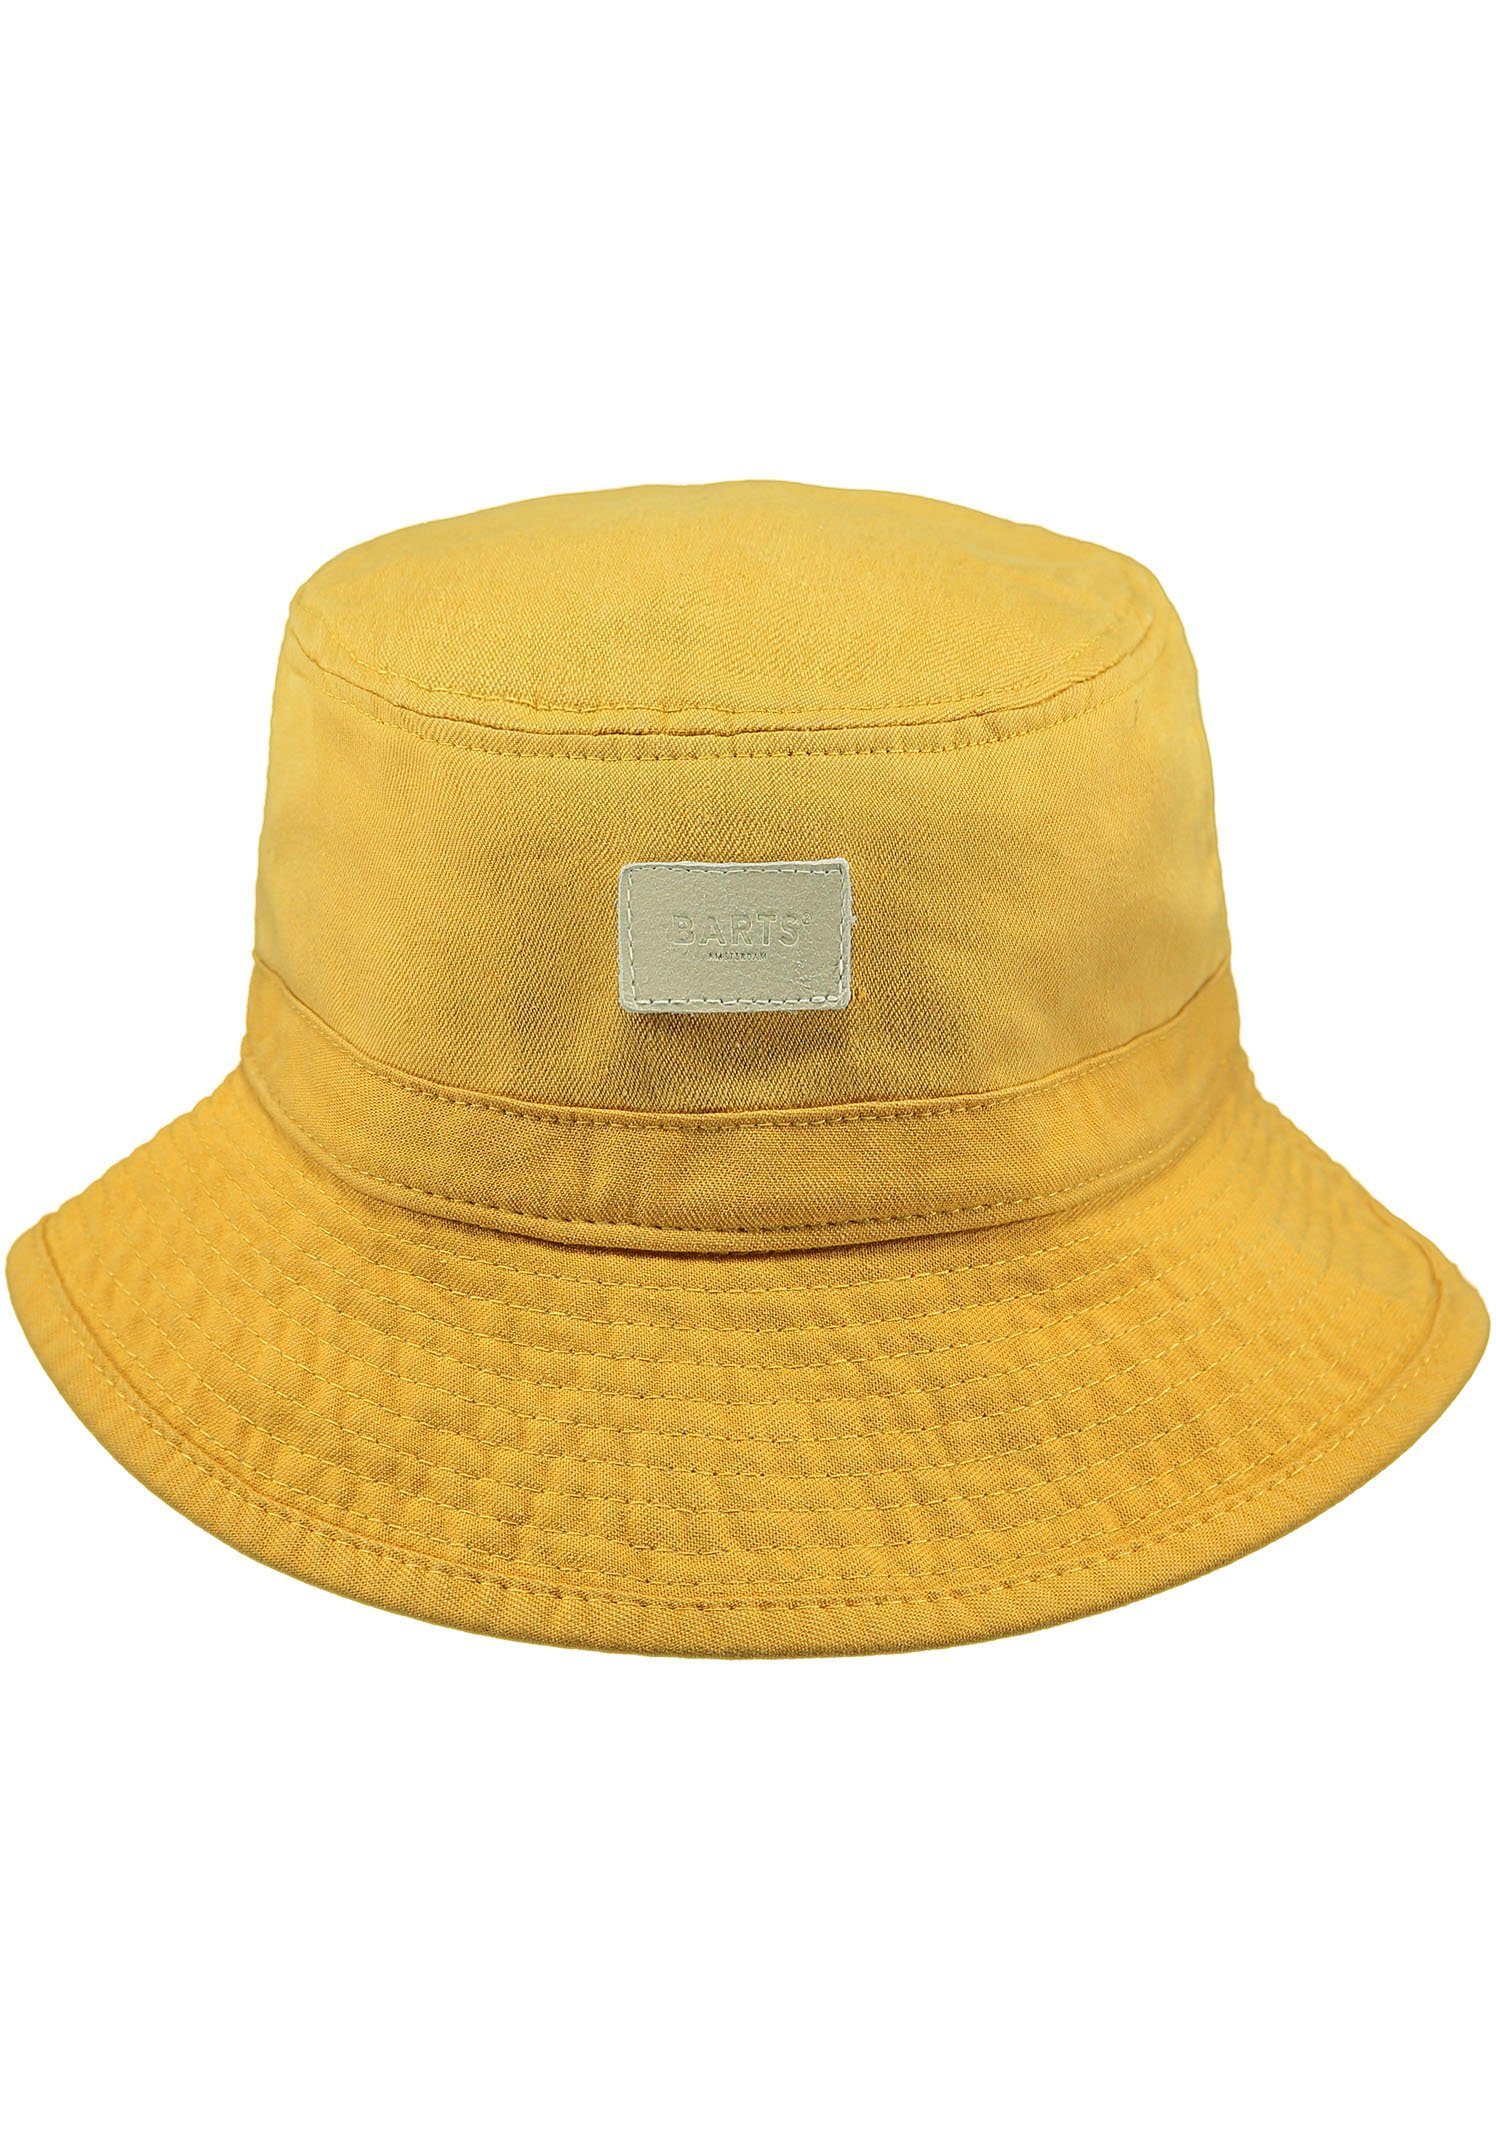 yellow Orohena Fischerhut Hat Barts